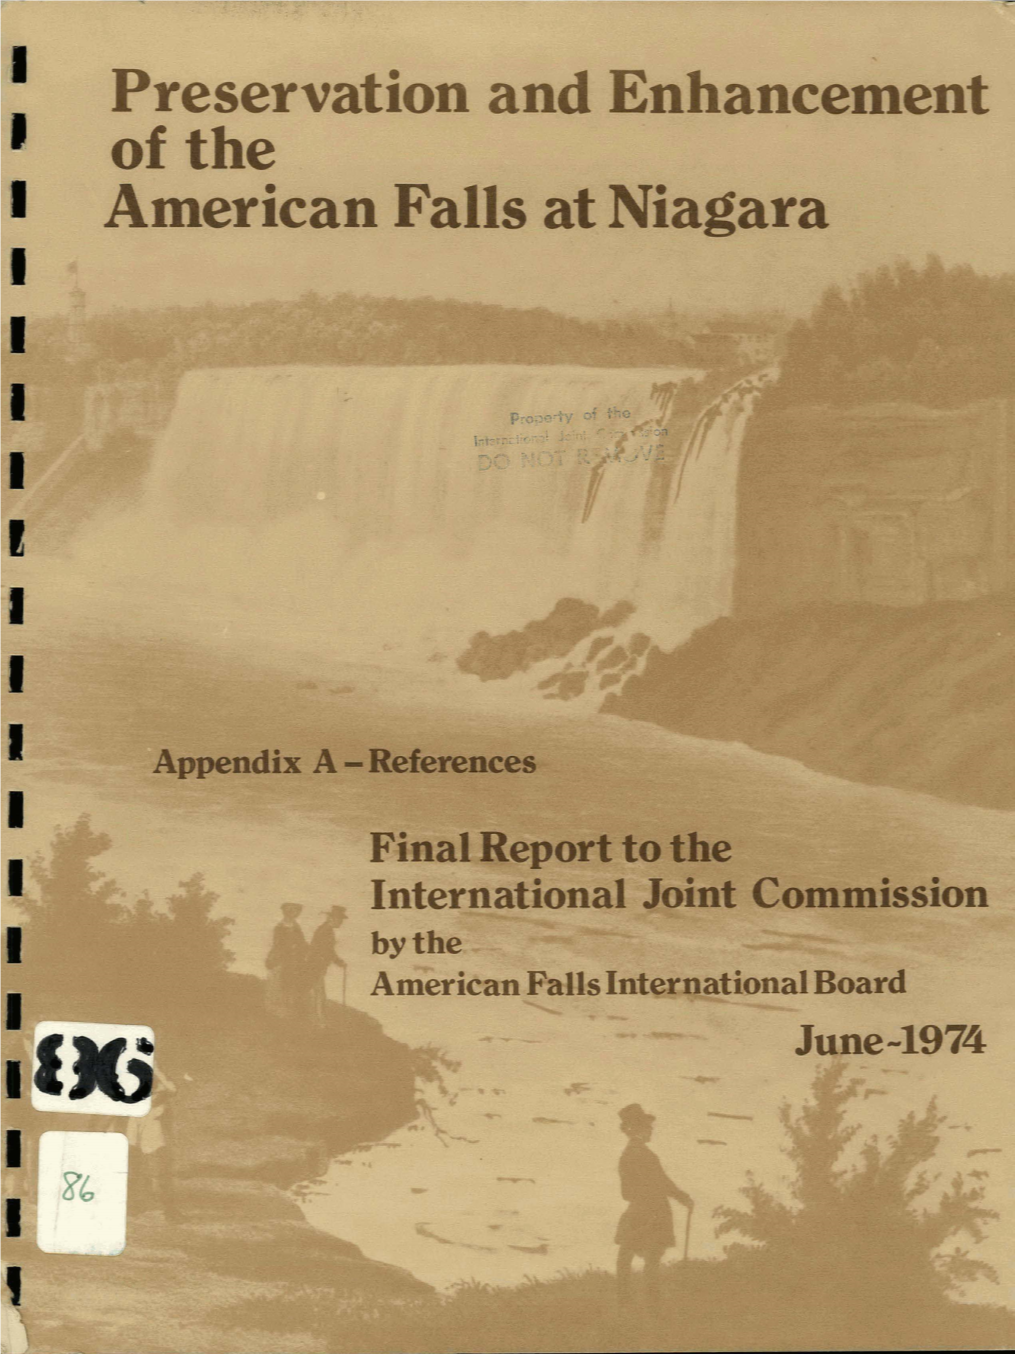 Ion and Enhancement of the American Falls at Niagara